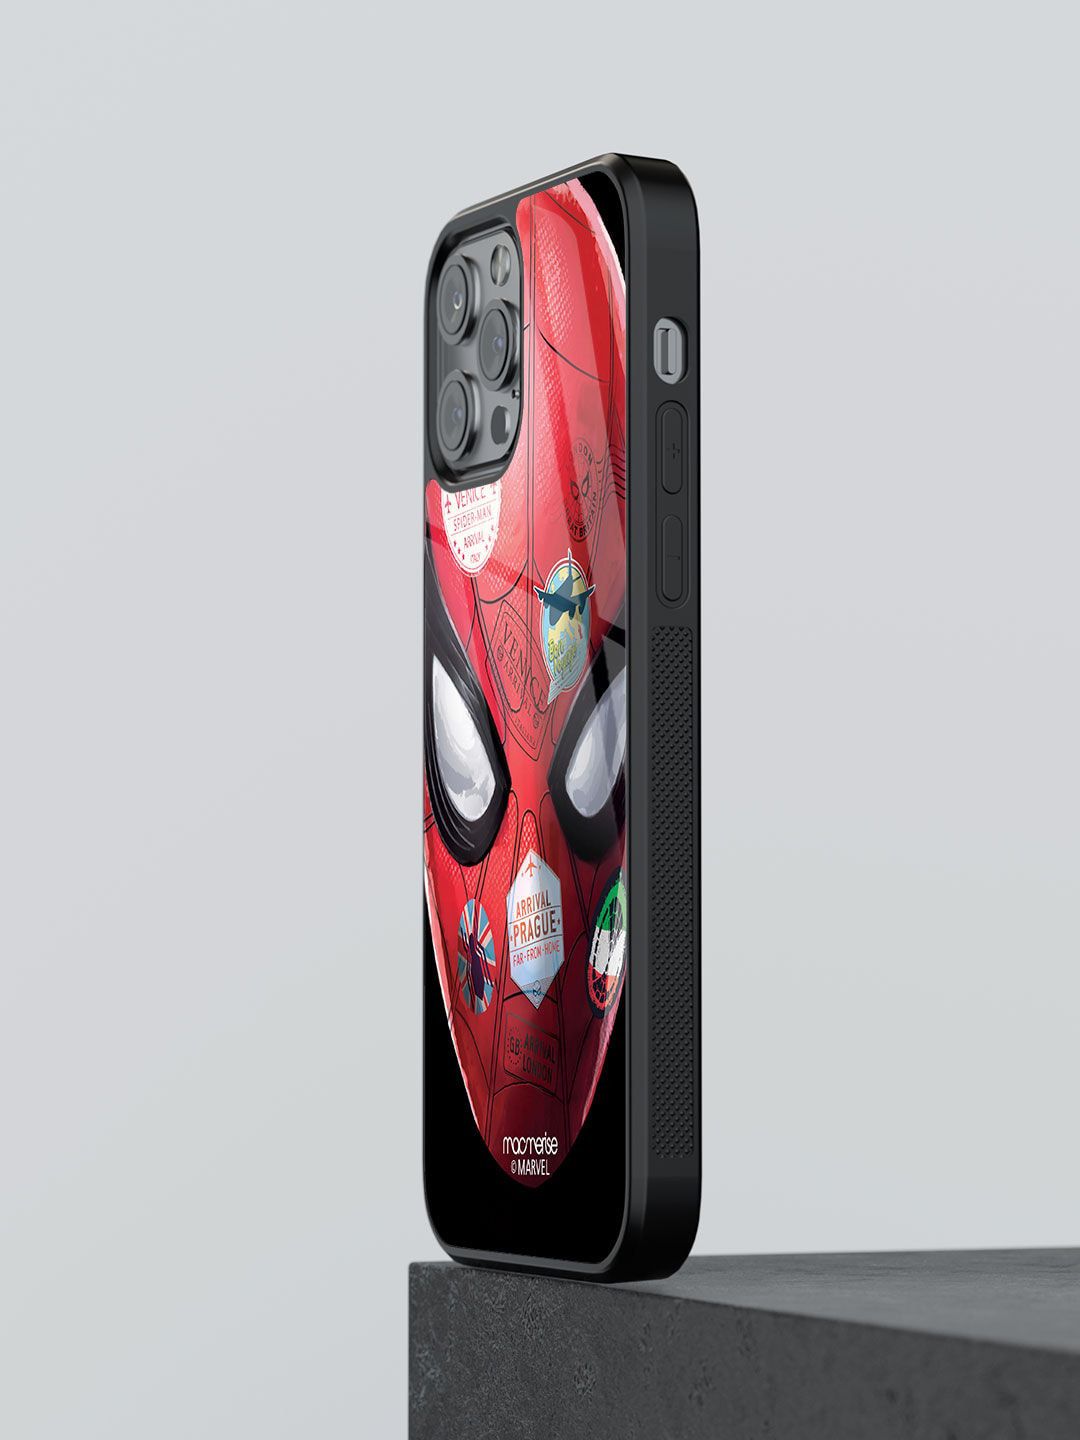 macmerise Black And Red Spiderman Print iPhone 12 Pro Max Phone Case Price in India